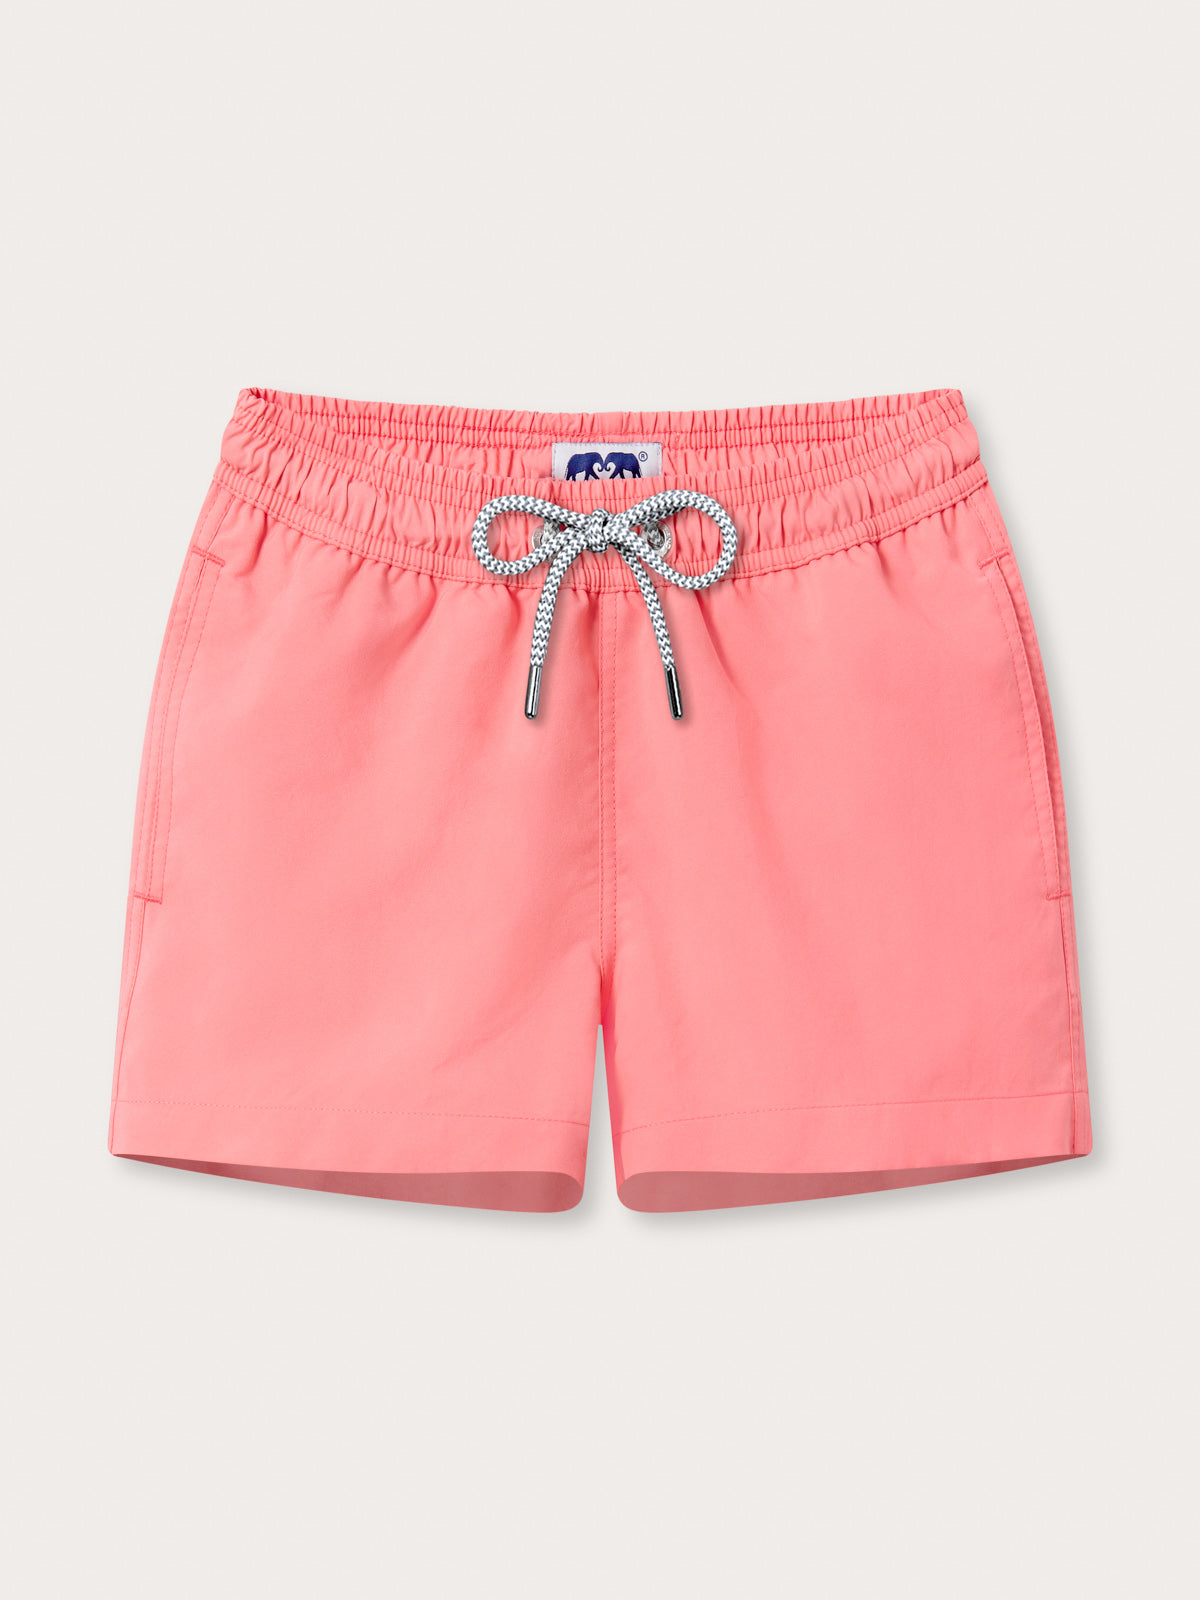 Boys Watermelon Staniel Swim Shorts in bright pink-red with drawstring waist.